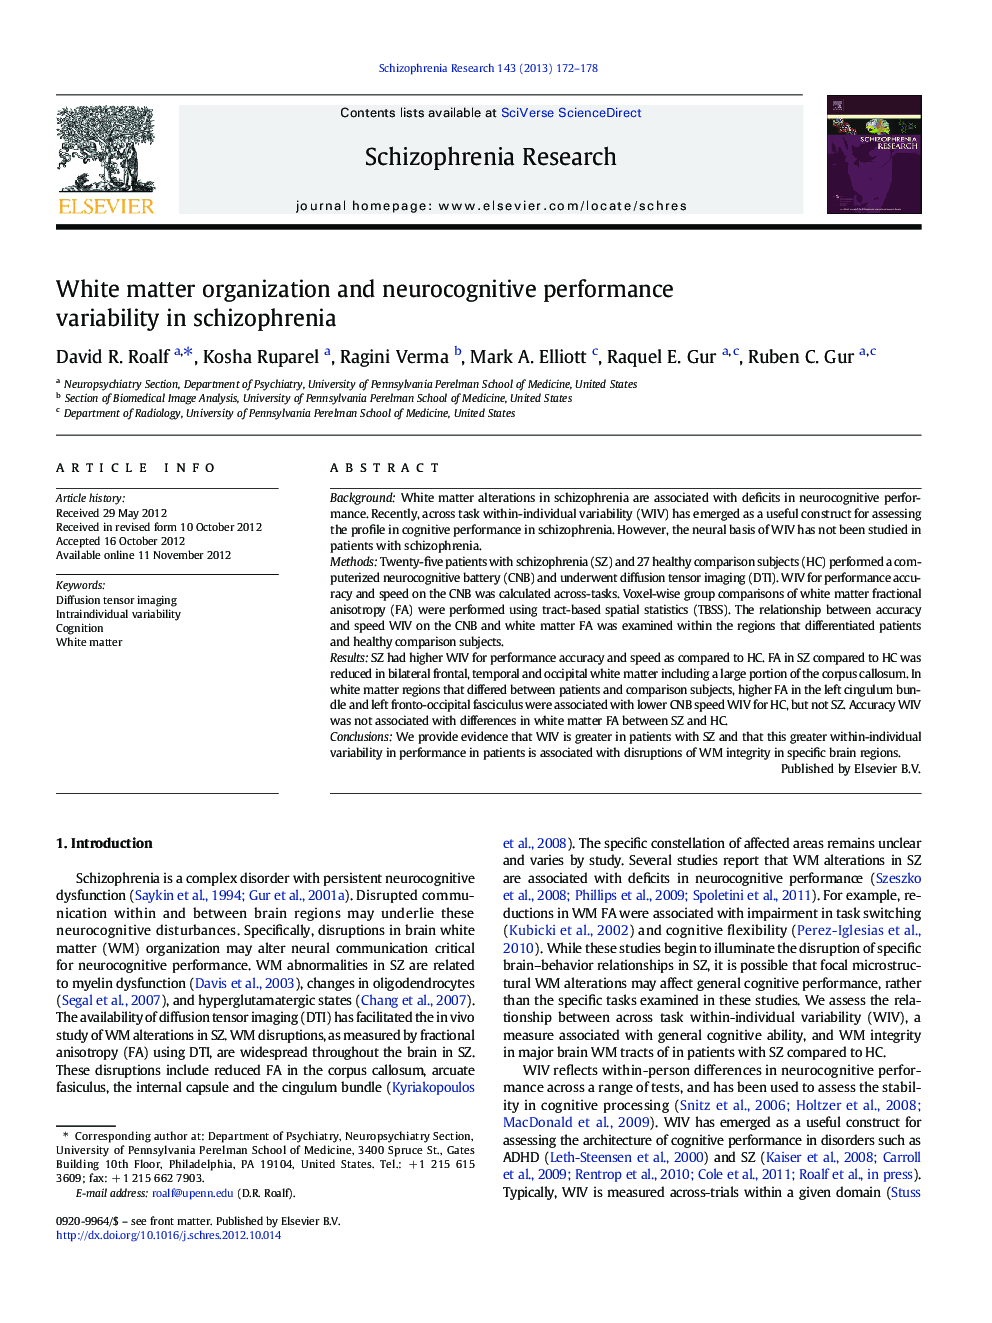 White matter organization and neurocognitive performance variability in schizophrenia